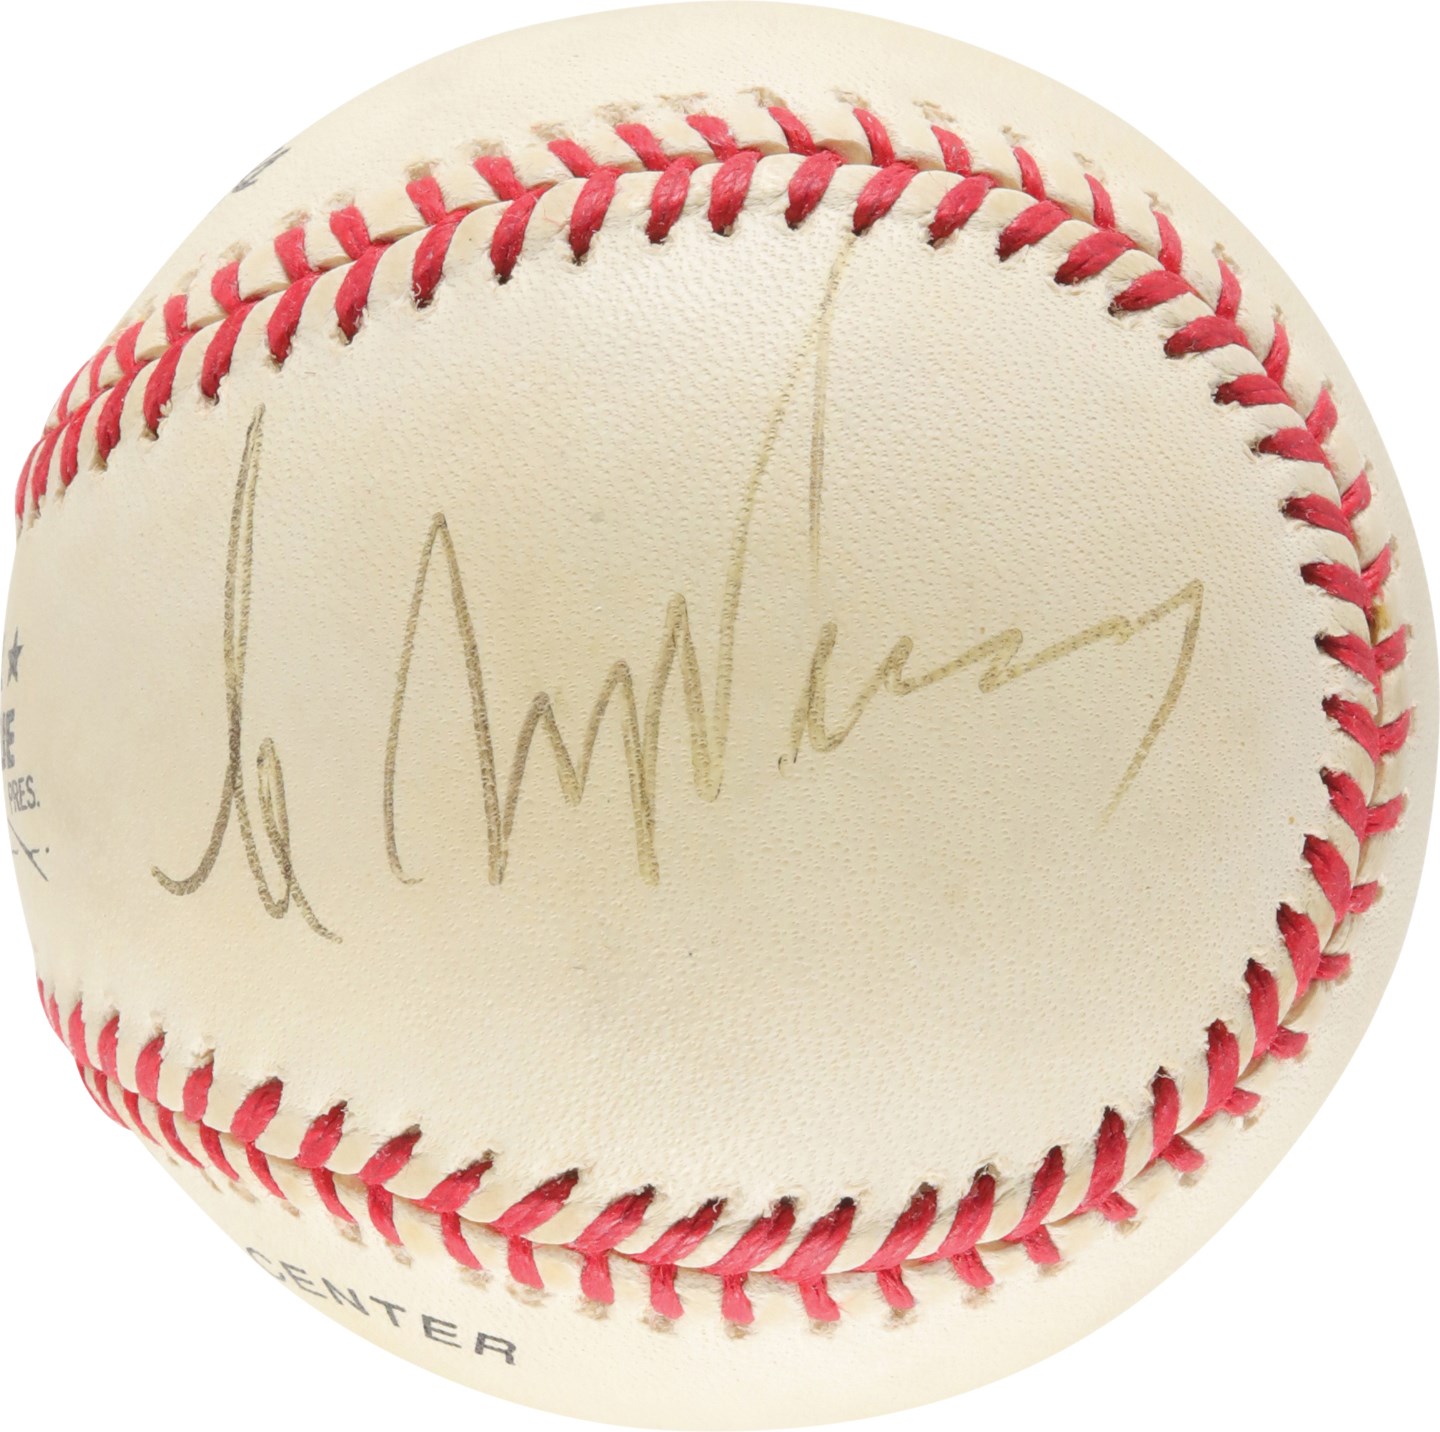 Baseball Autographs - Mikhail Gorbachev Single Signed Baseball (PSA)